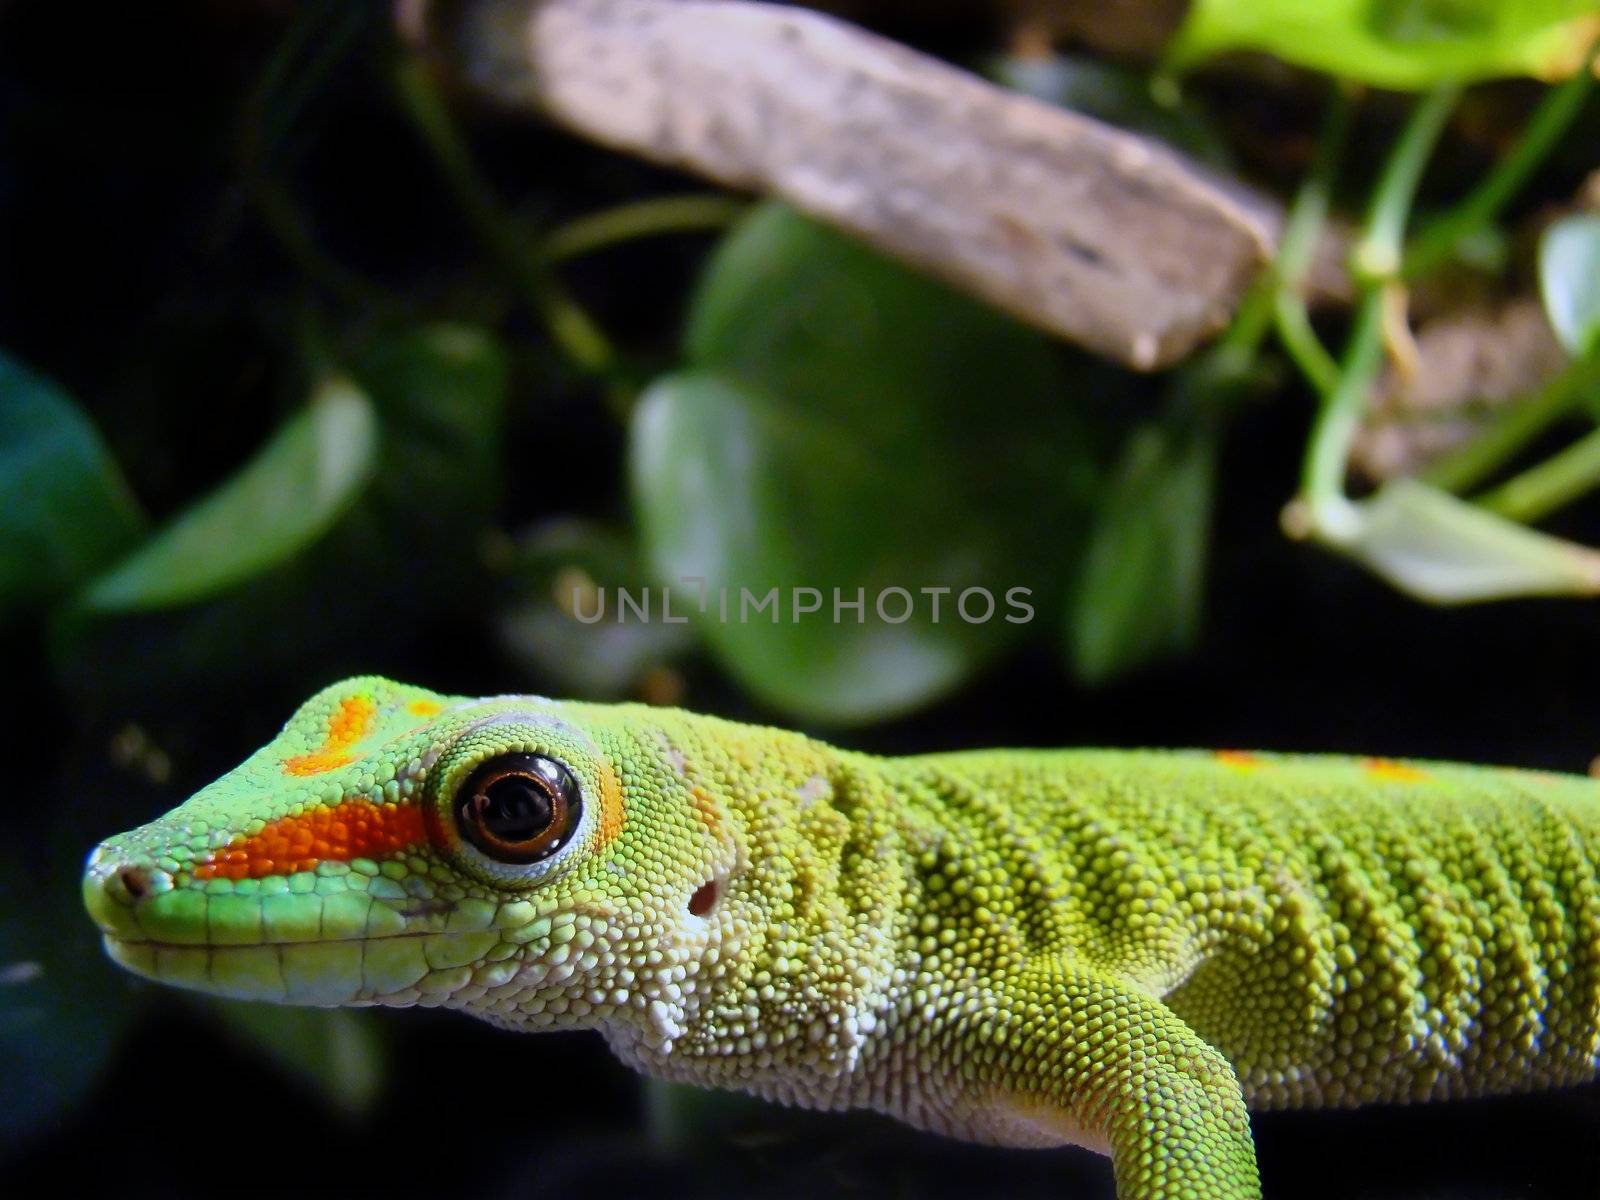           madagascar giant day gecko by amandaols